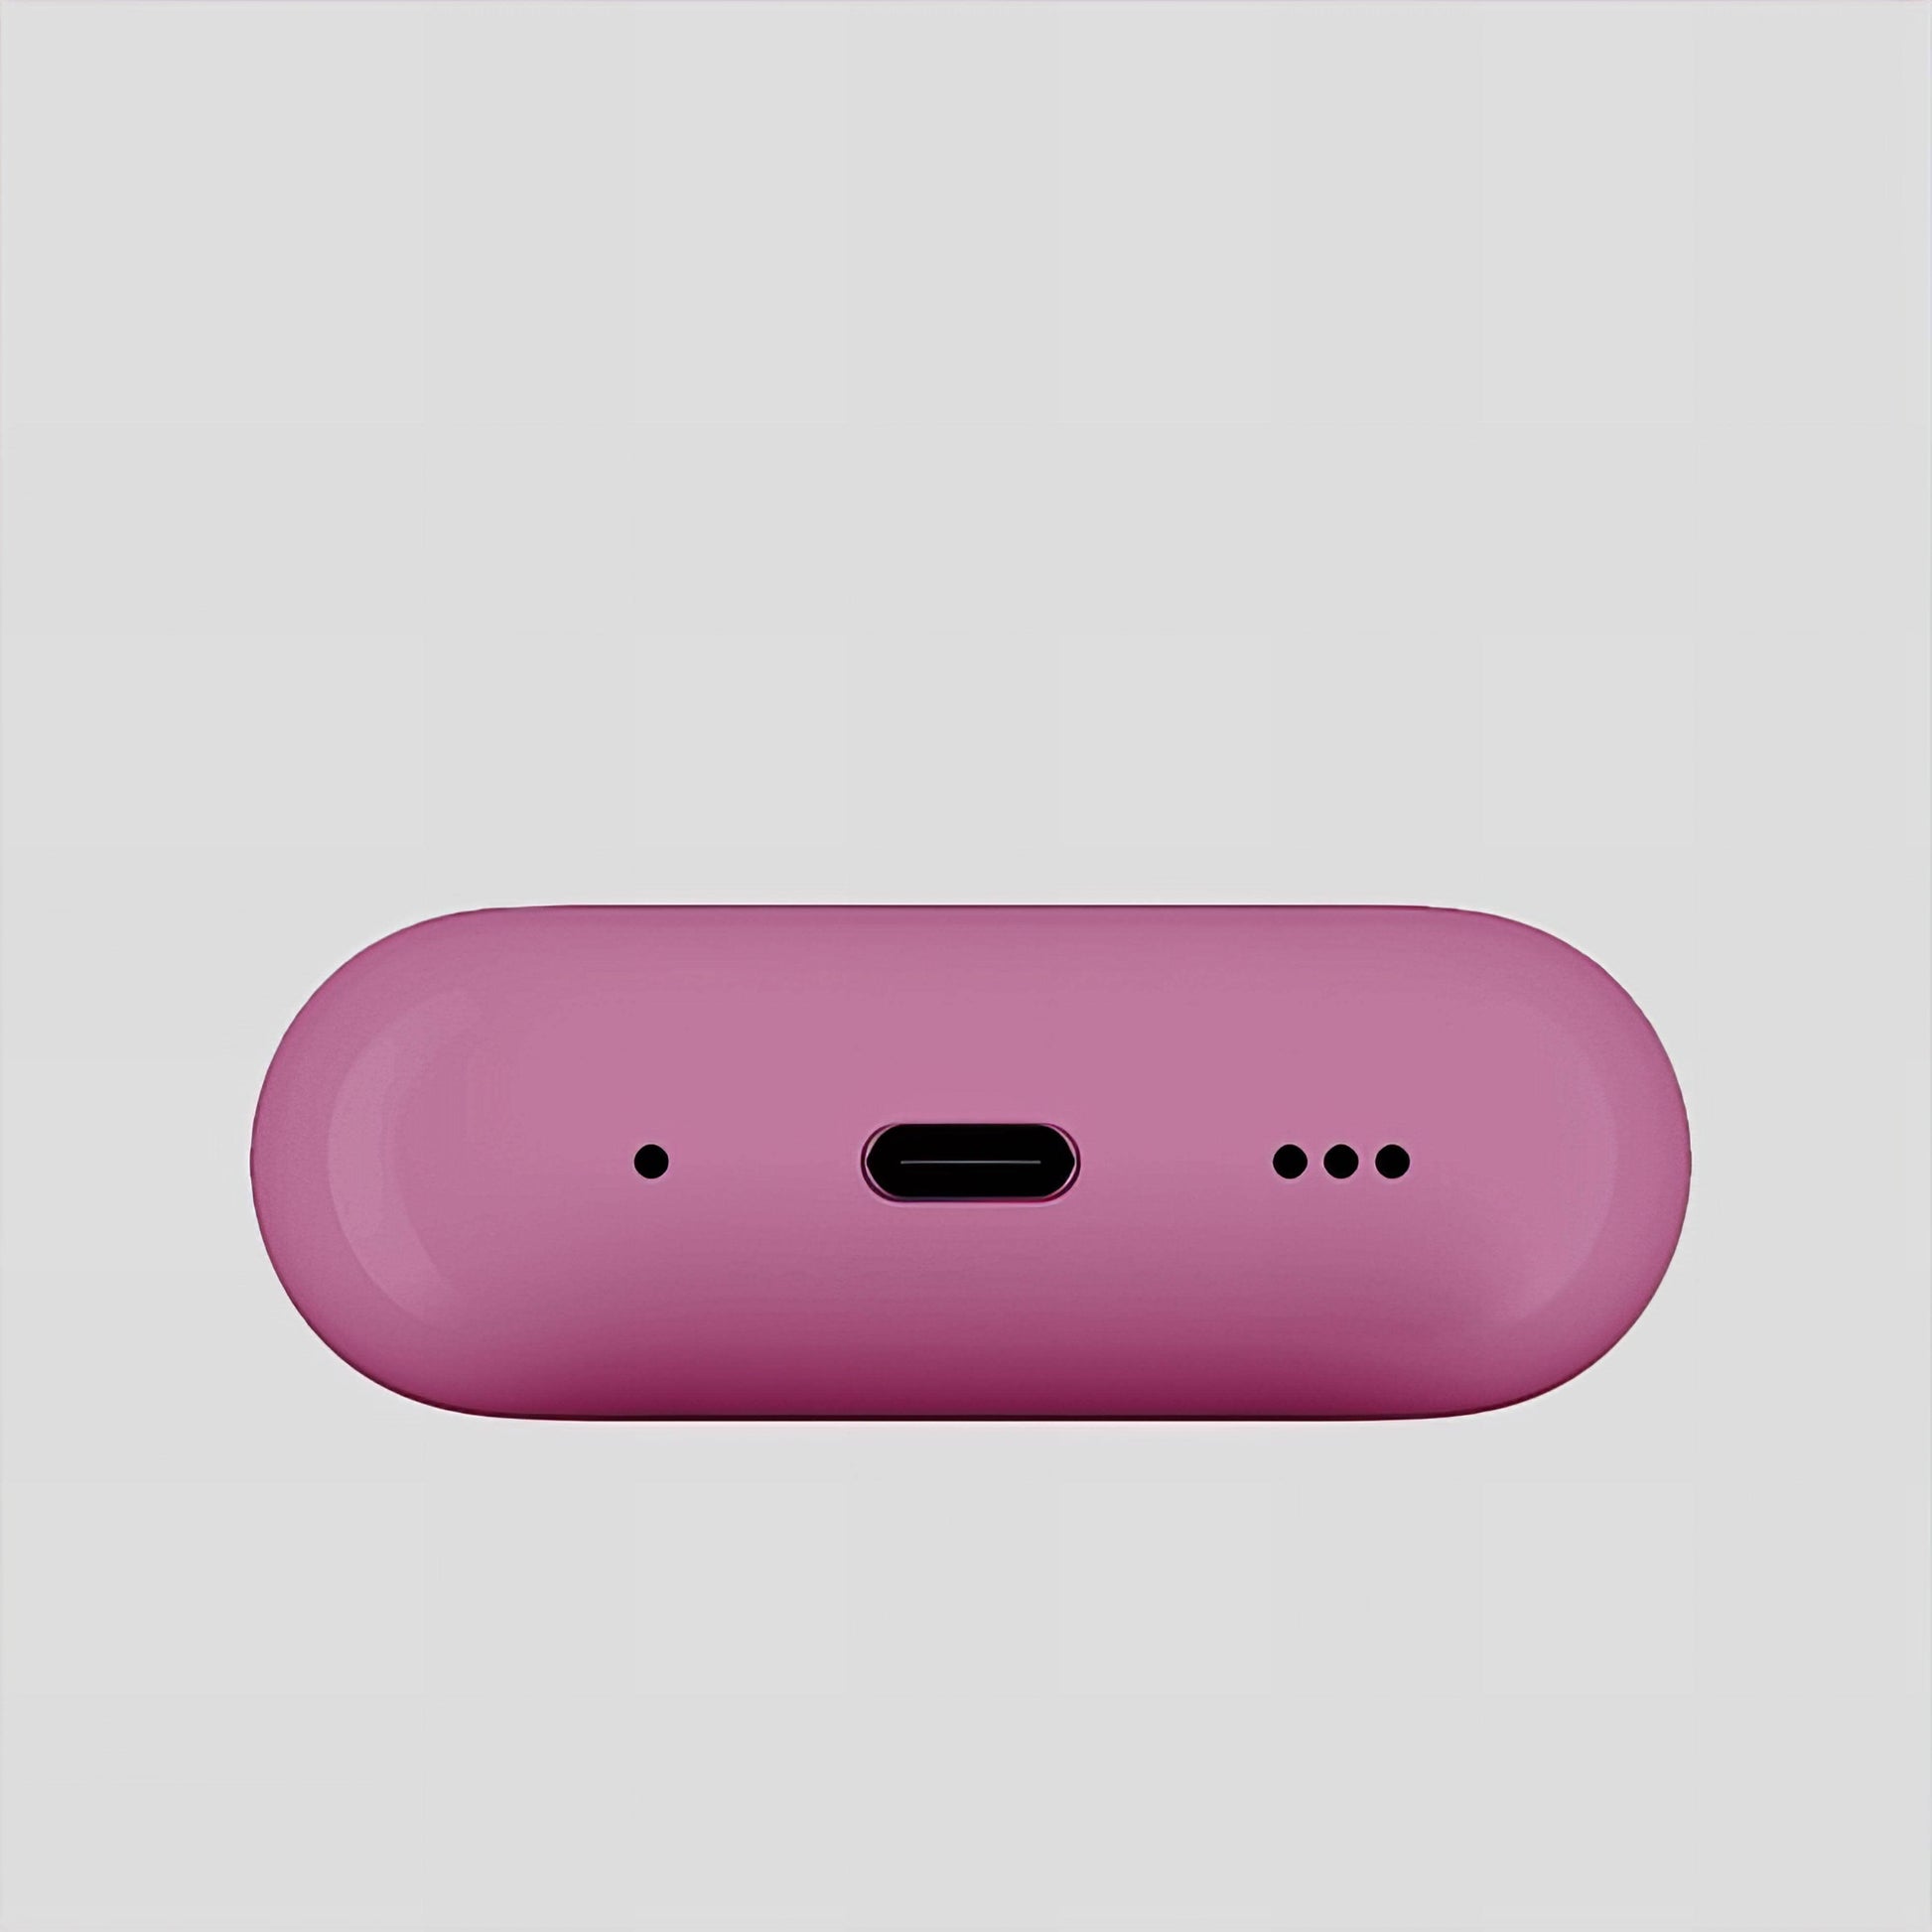 AirPods Pro 2 Colored Pink | USB C - Gatti Luxury